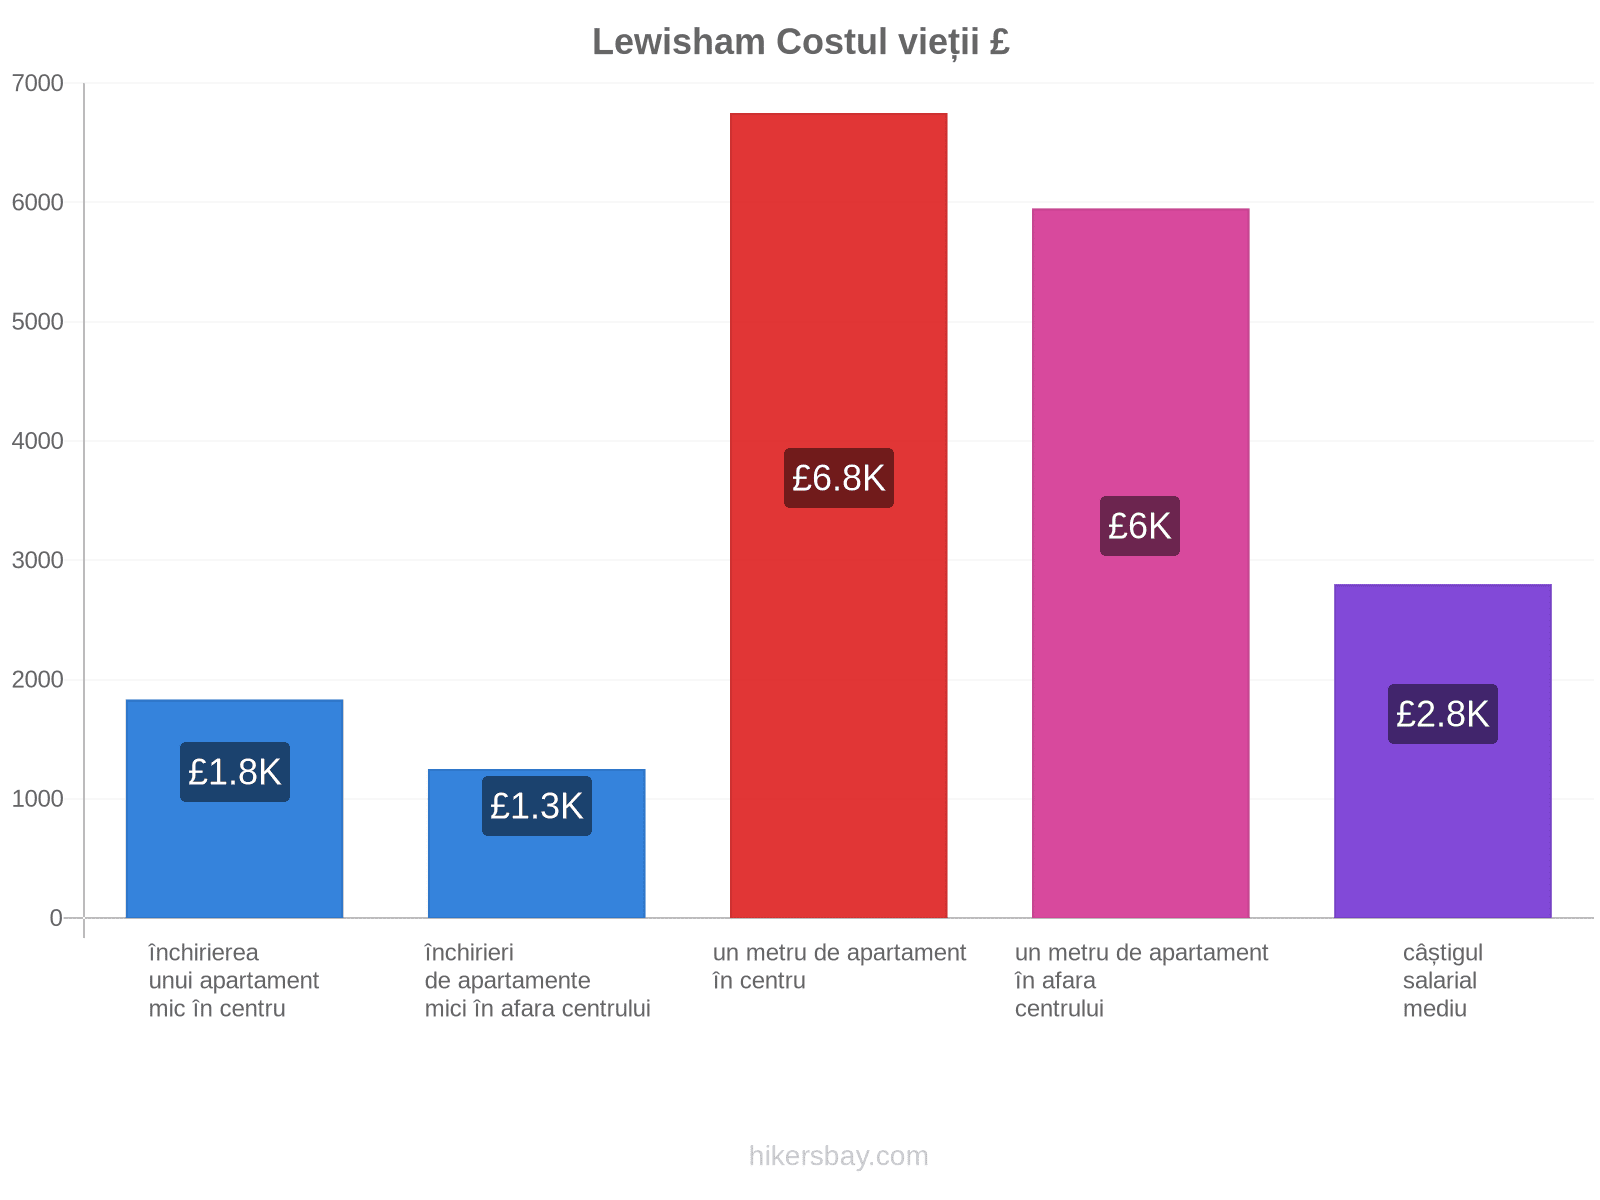 Lewisham costul vieții hikersbay.com